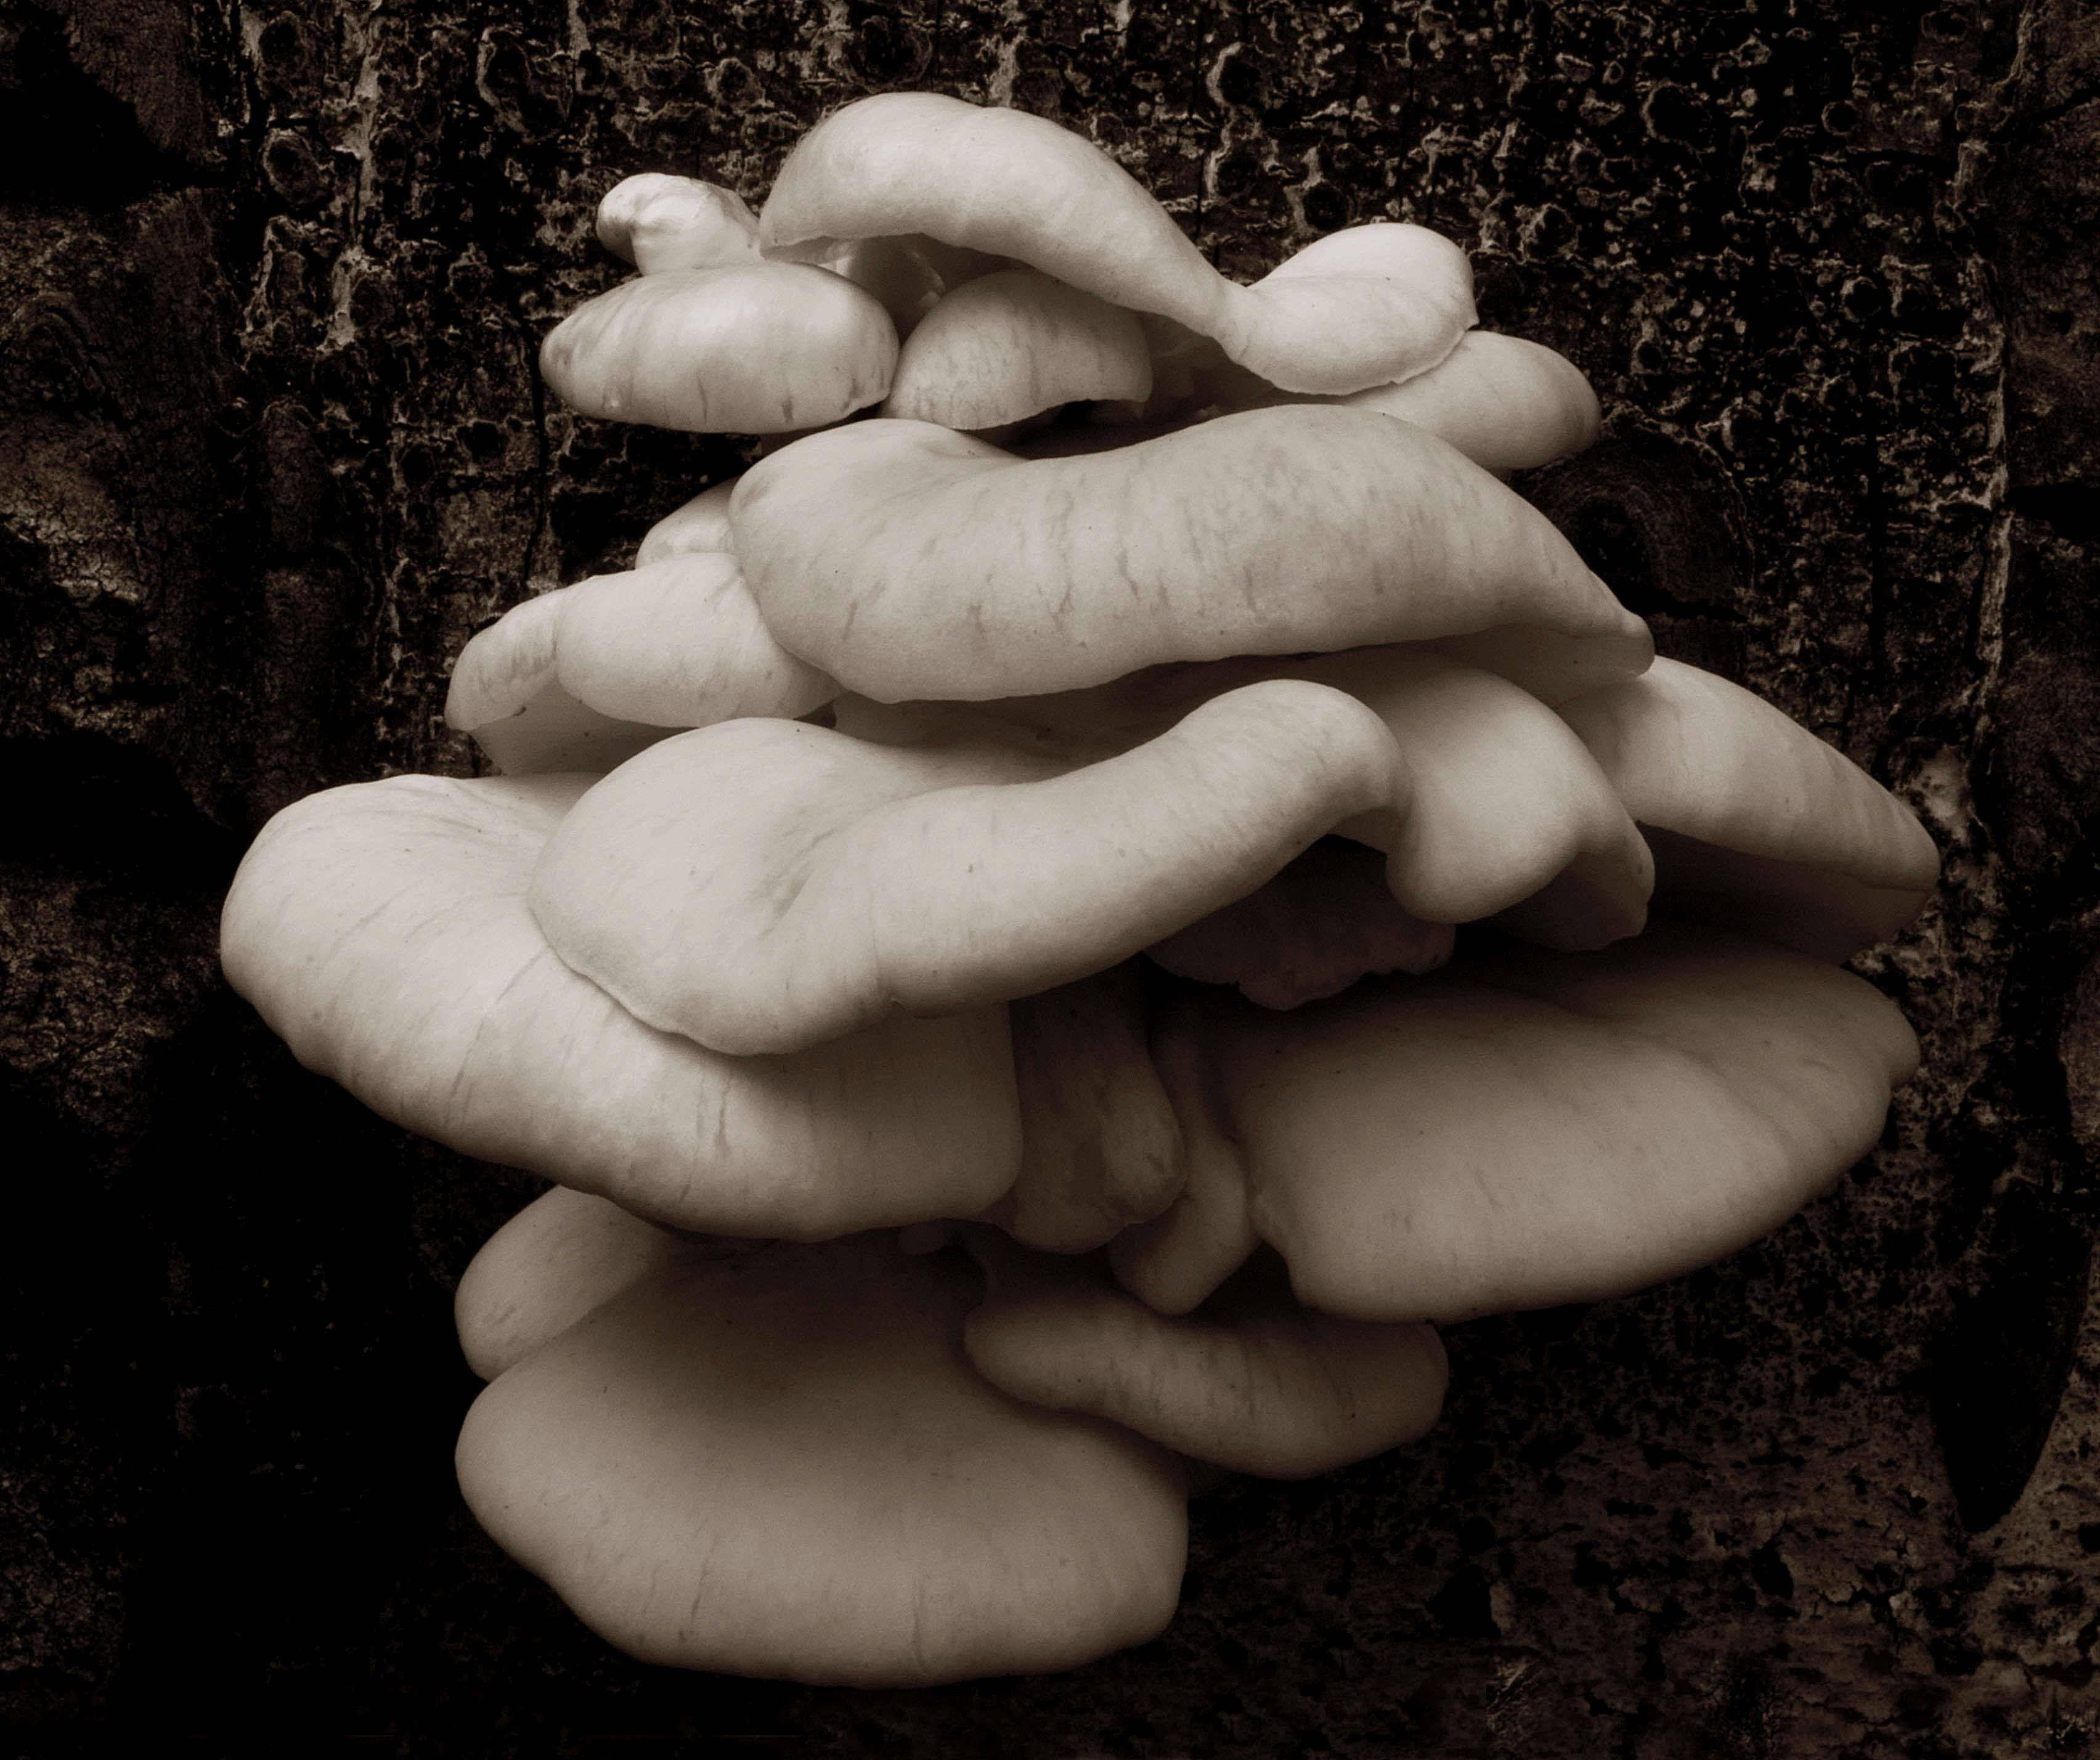 Wild mushroom-type fungus in the San Francisco Peaks, northern Arizona